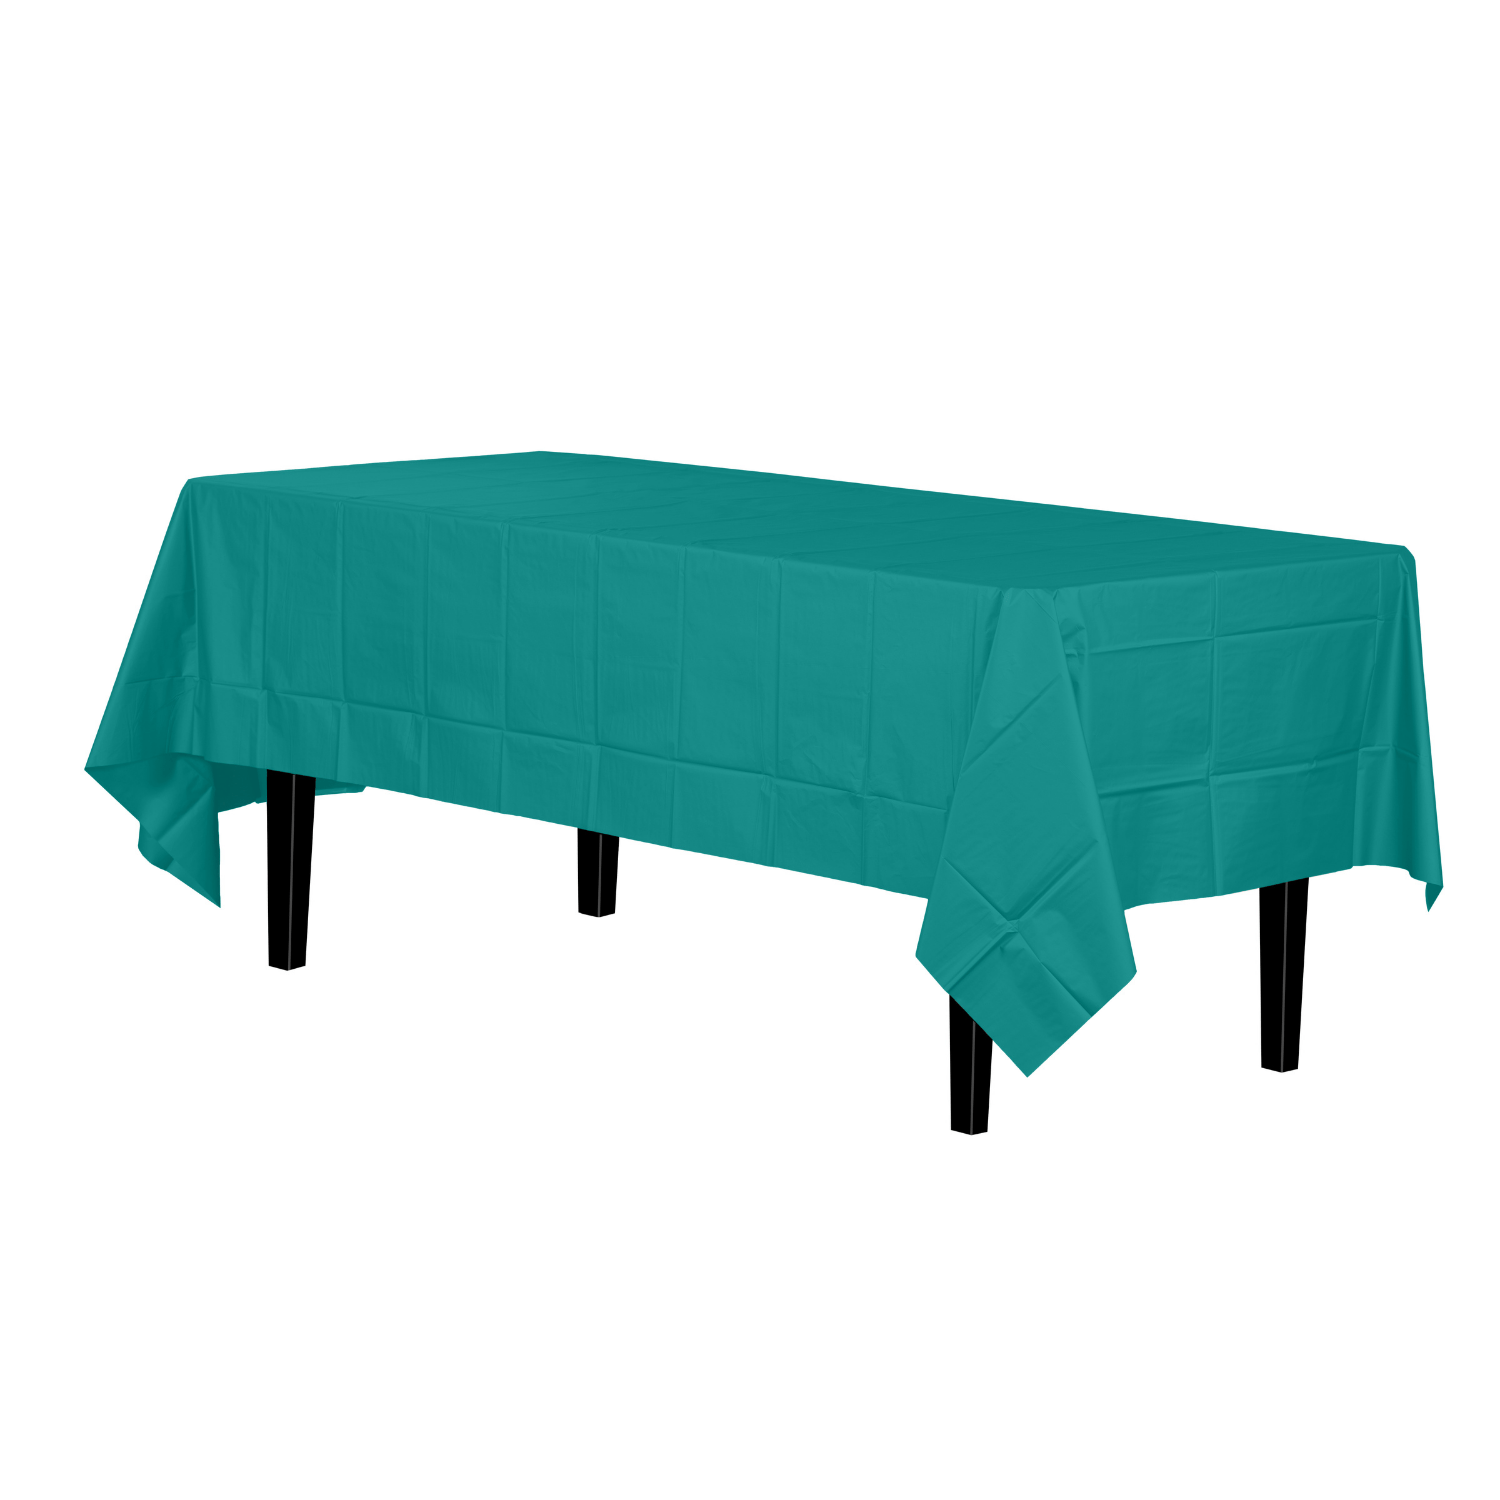 Premium Teal Plastic Tablecloth | 96 Count